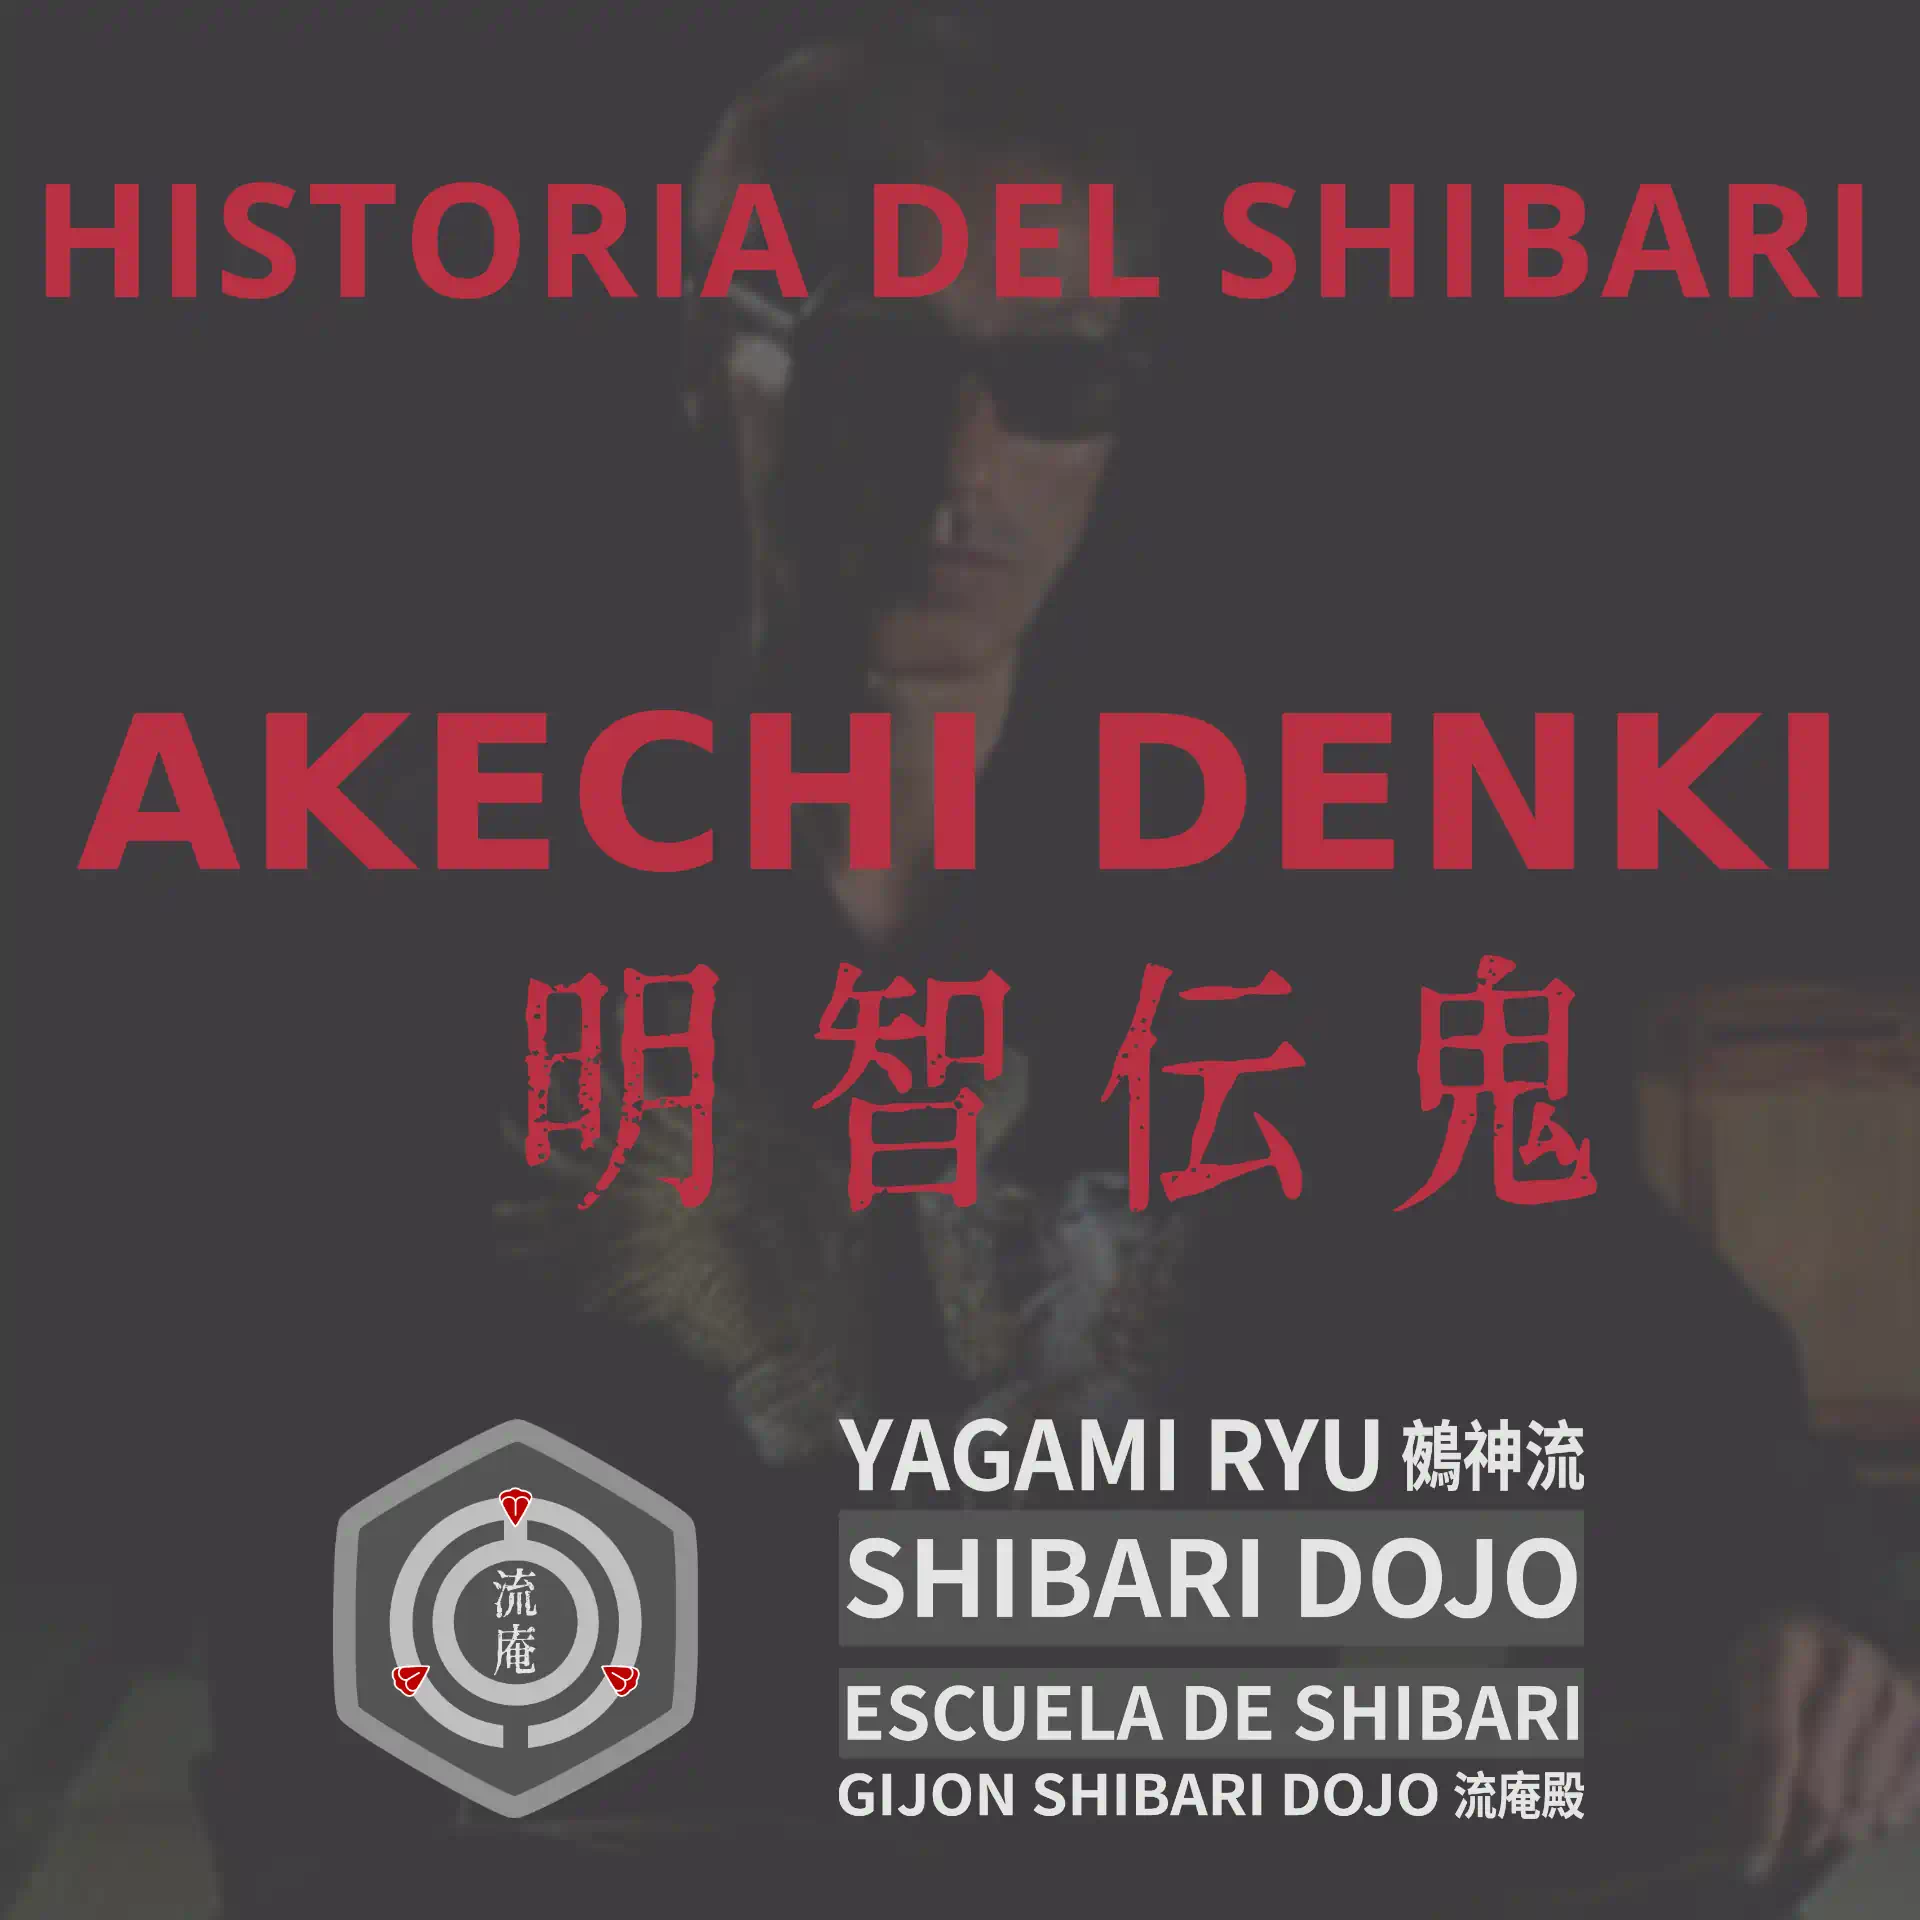 Akechi Denki (明智伝鬼)